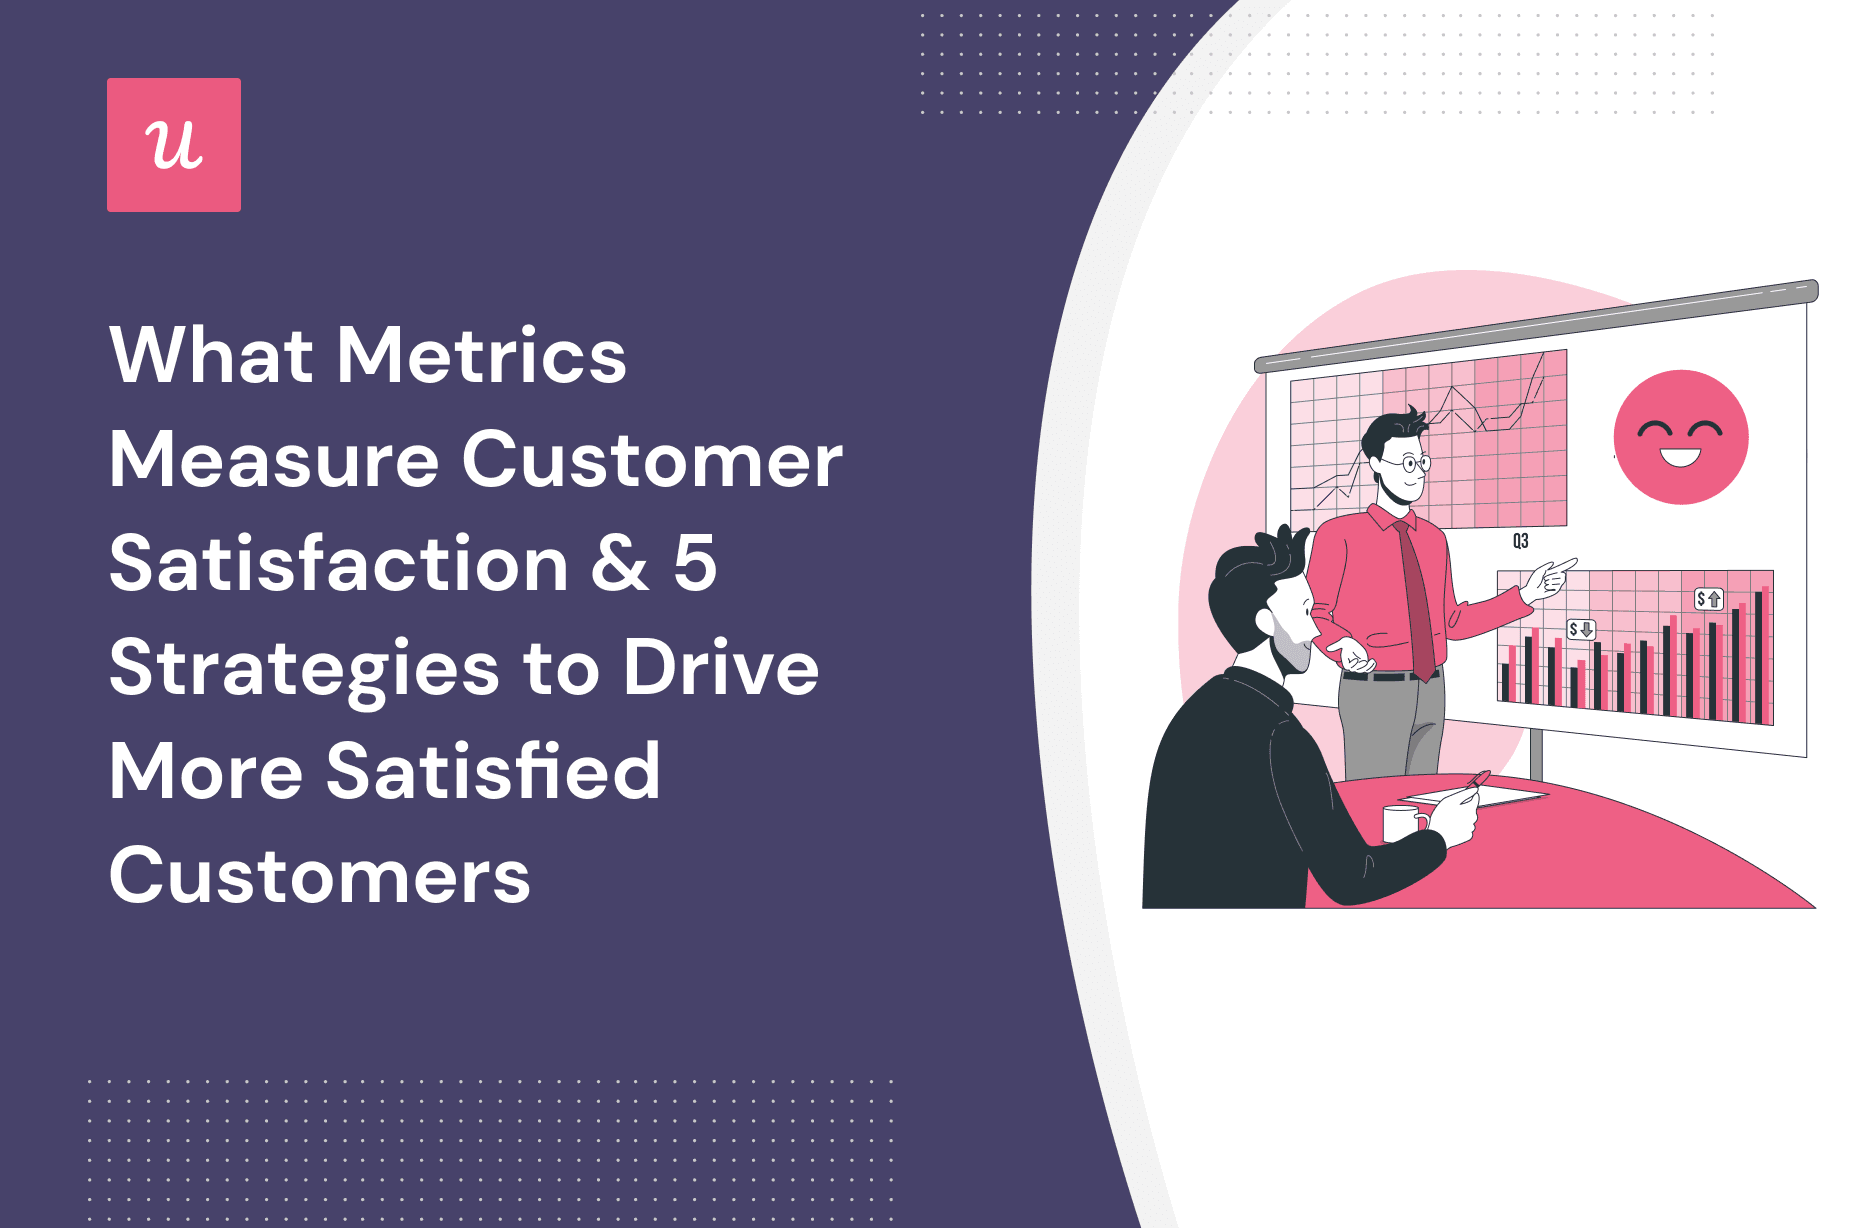 What Metrics Measure Customer Satisfaction & 5 Strategies To Drive More Satisfied Customers cover